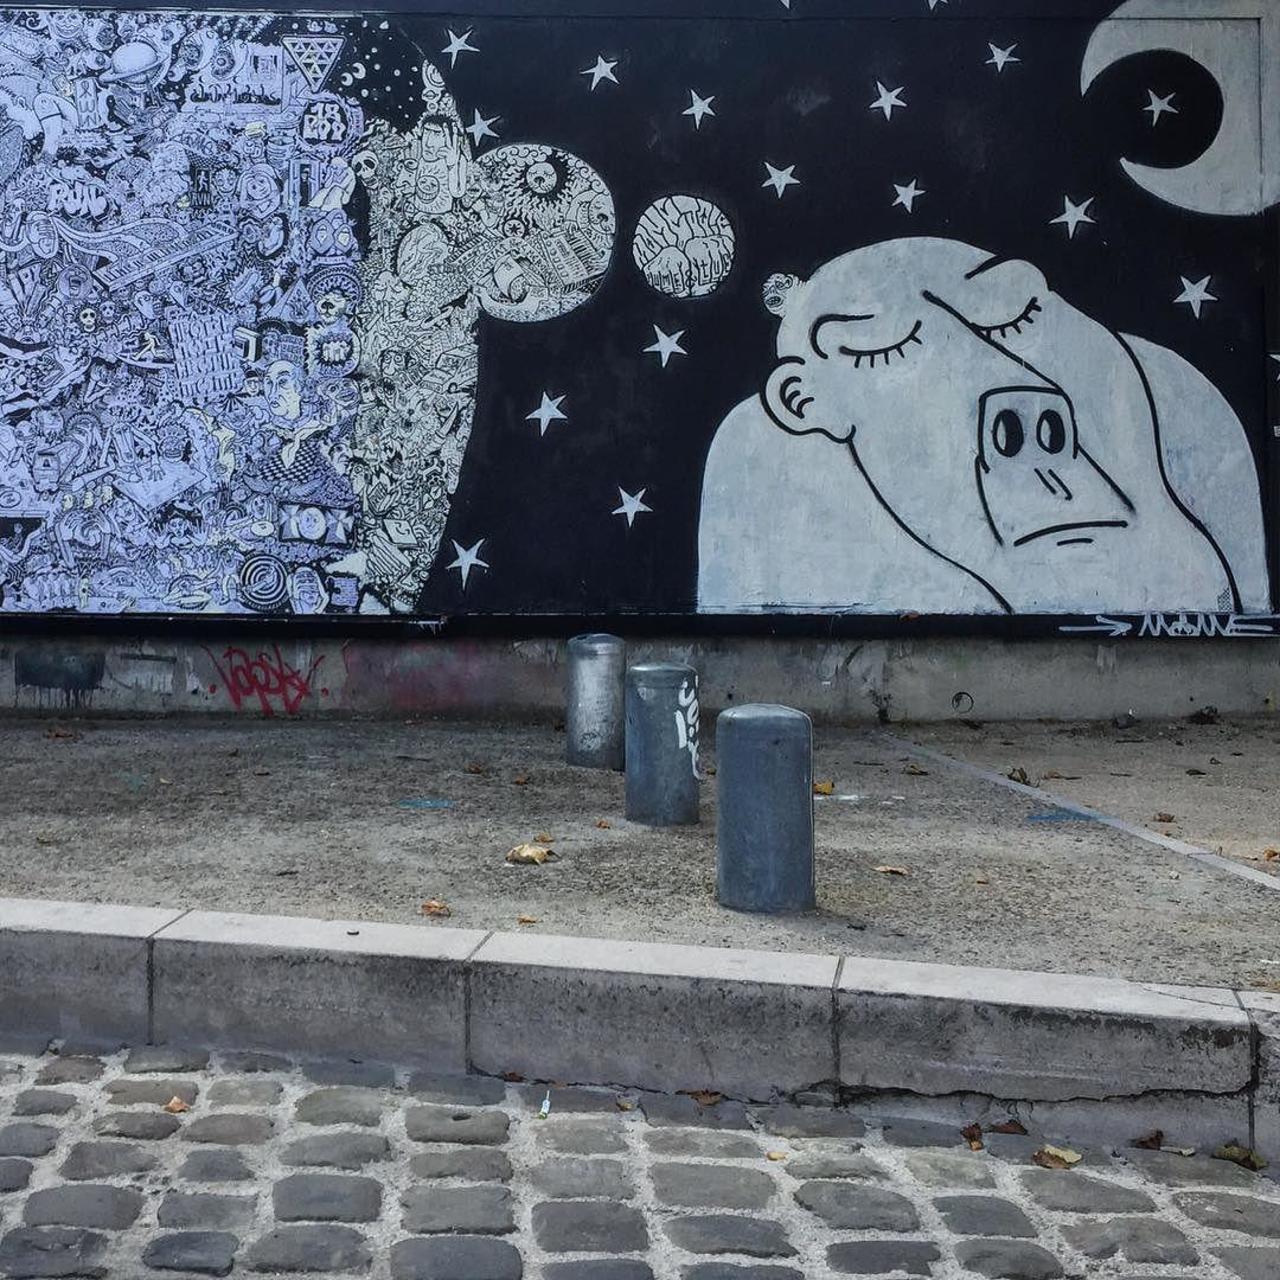 #Paris #graffiti photo by @catscoffeecreativity http://ift.tt/1REnHHz #StreetArt http://t.co/jDLWtA998P